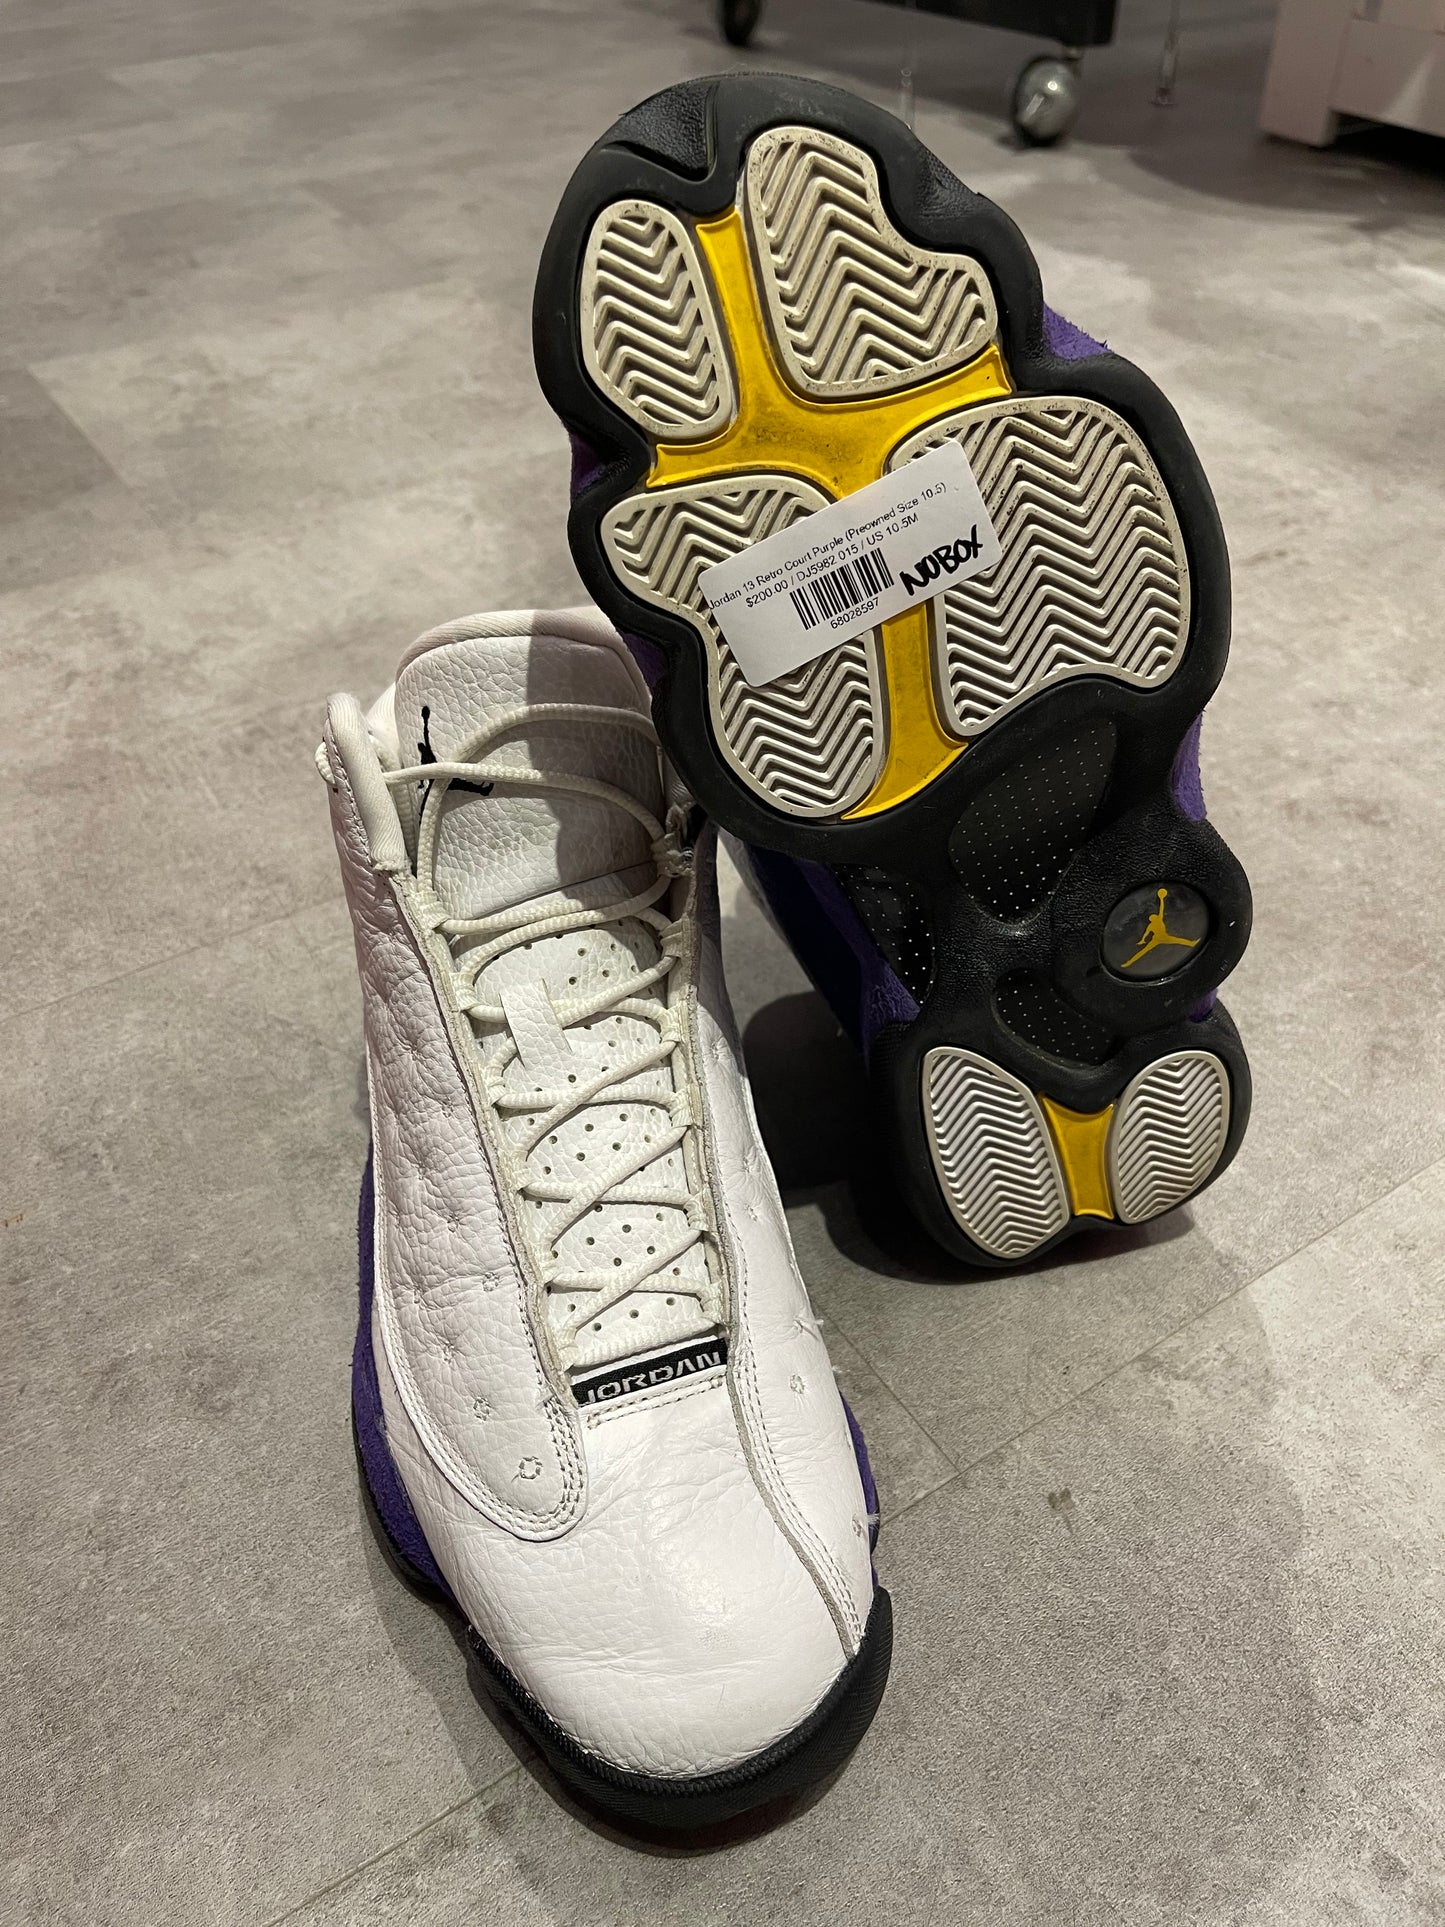 Jordan 13 Retro Lakers (Preowned Size 10.5)